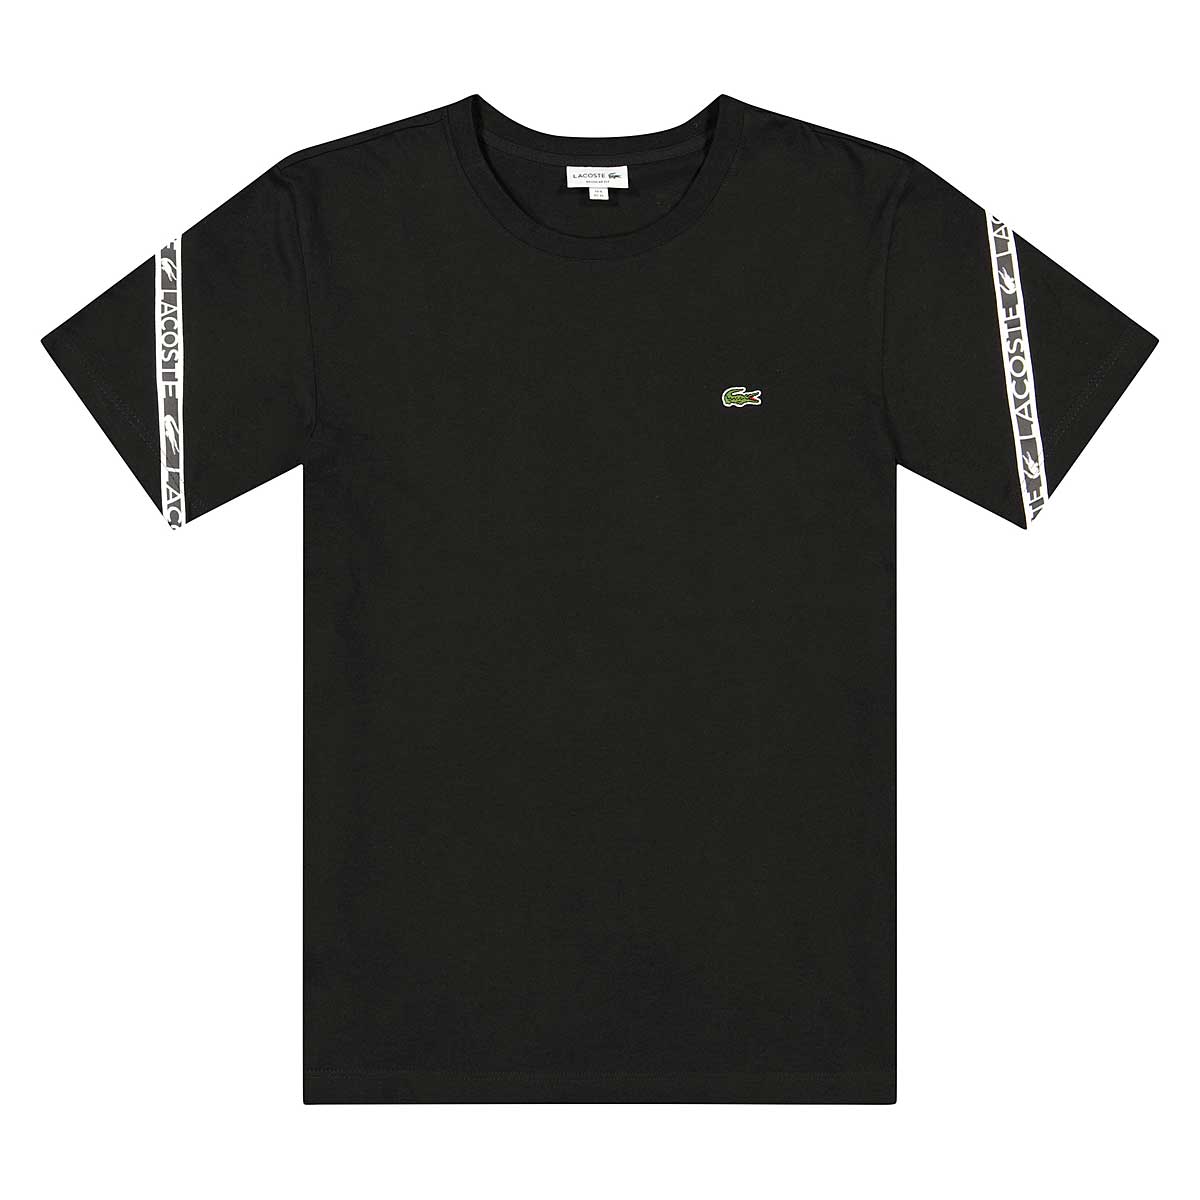 Lacoste Taping T-Shirt, Black